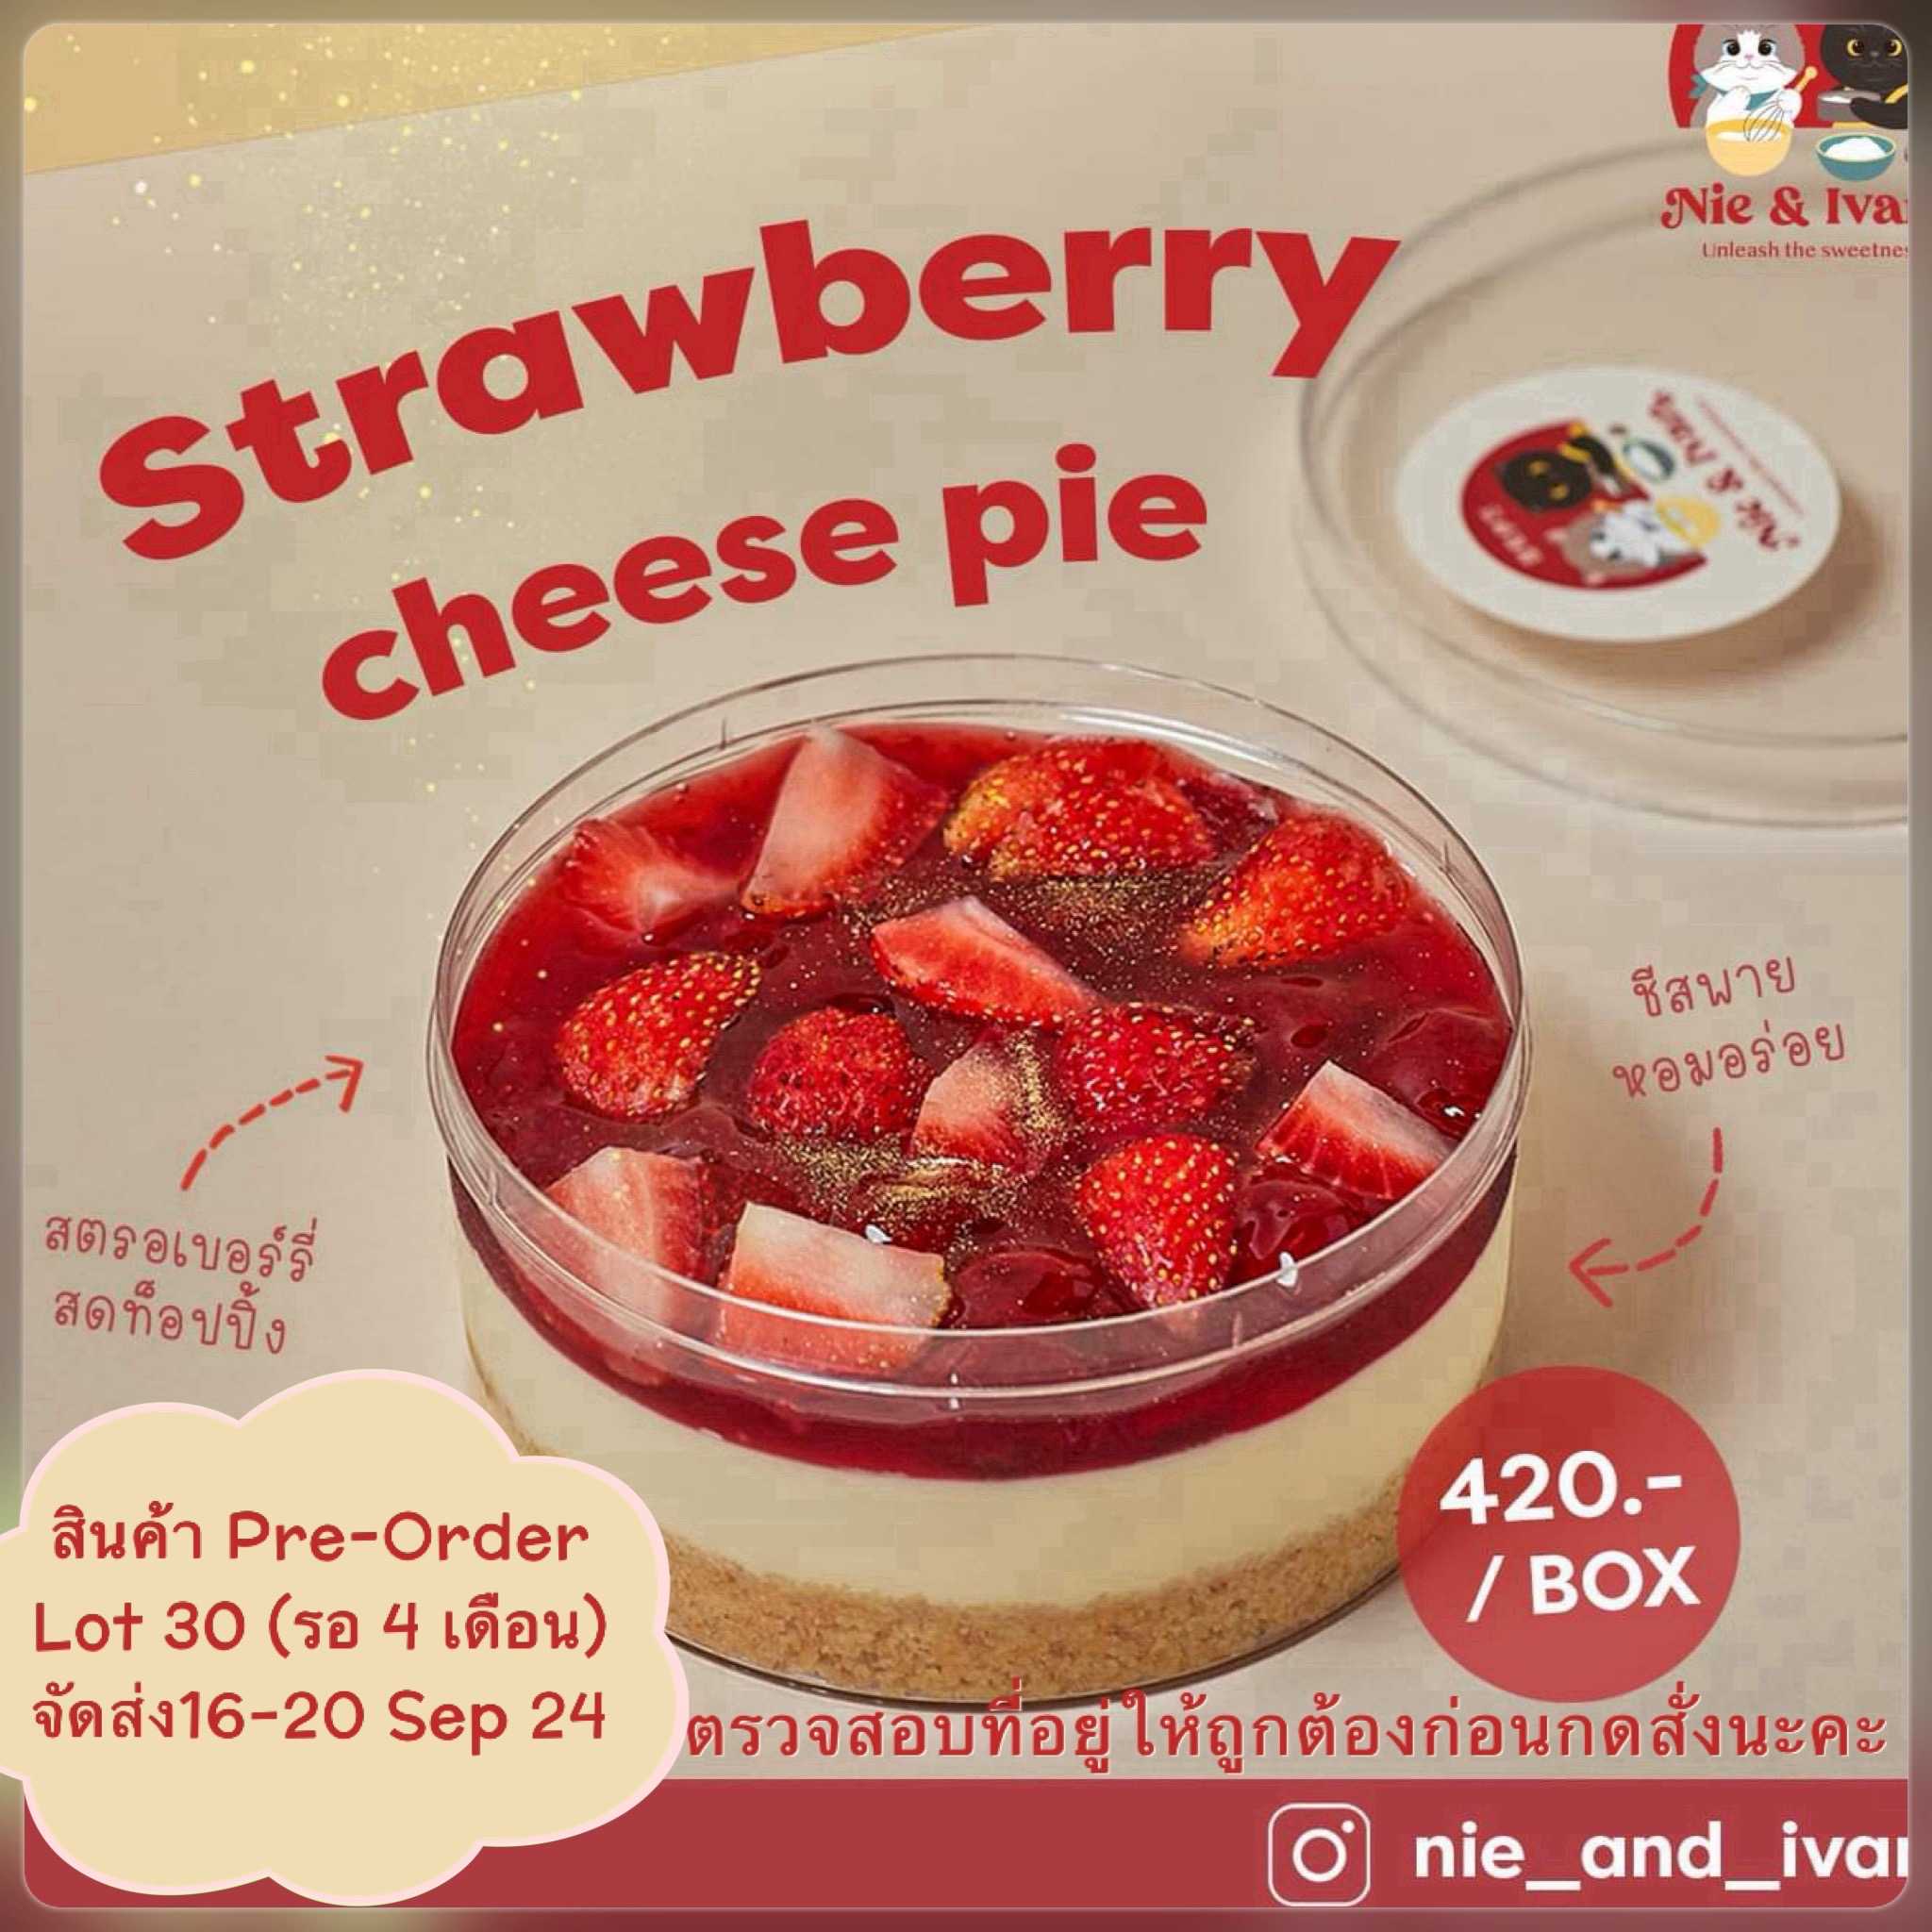 Strawberry cheese pie Lot30 (จัดส่งวันที่16-20 กันยายน) ขนมยอดนิยม